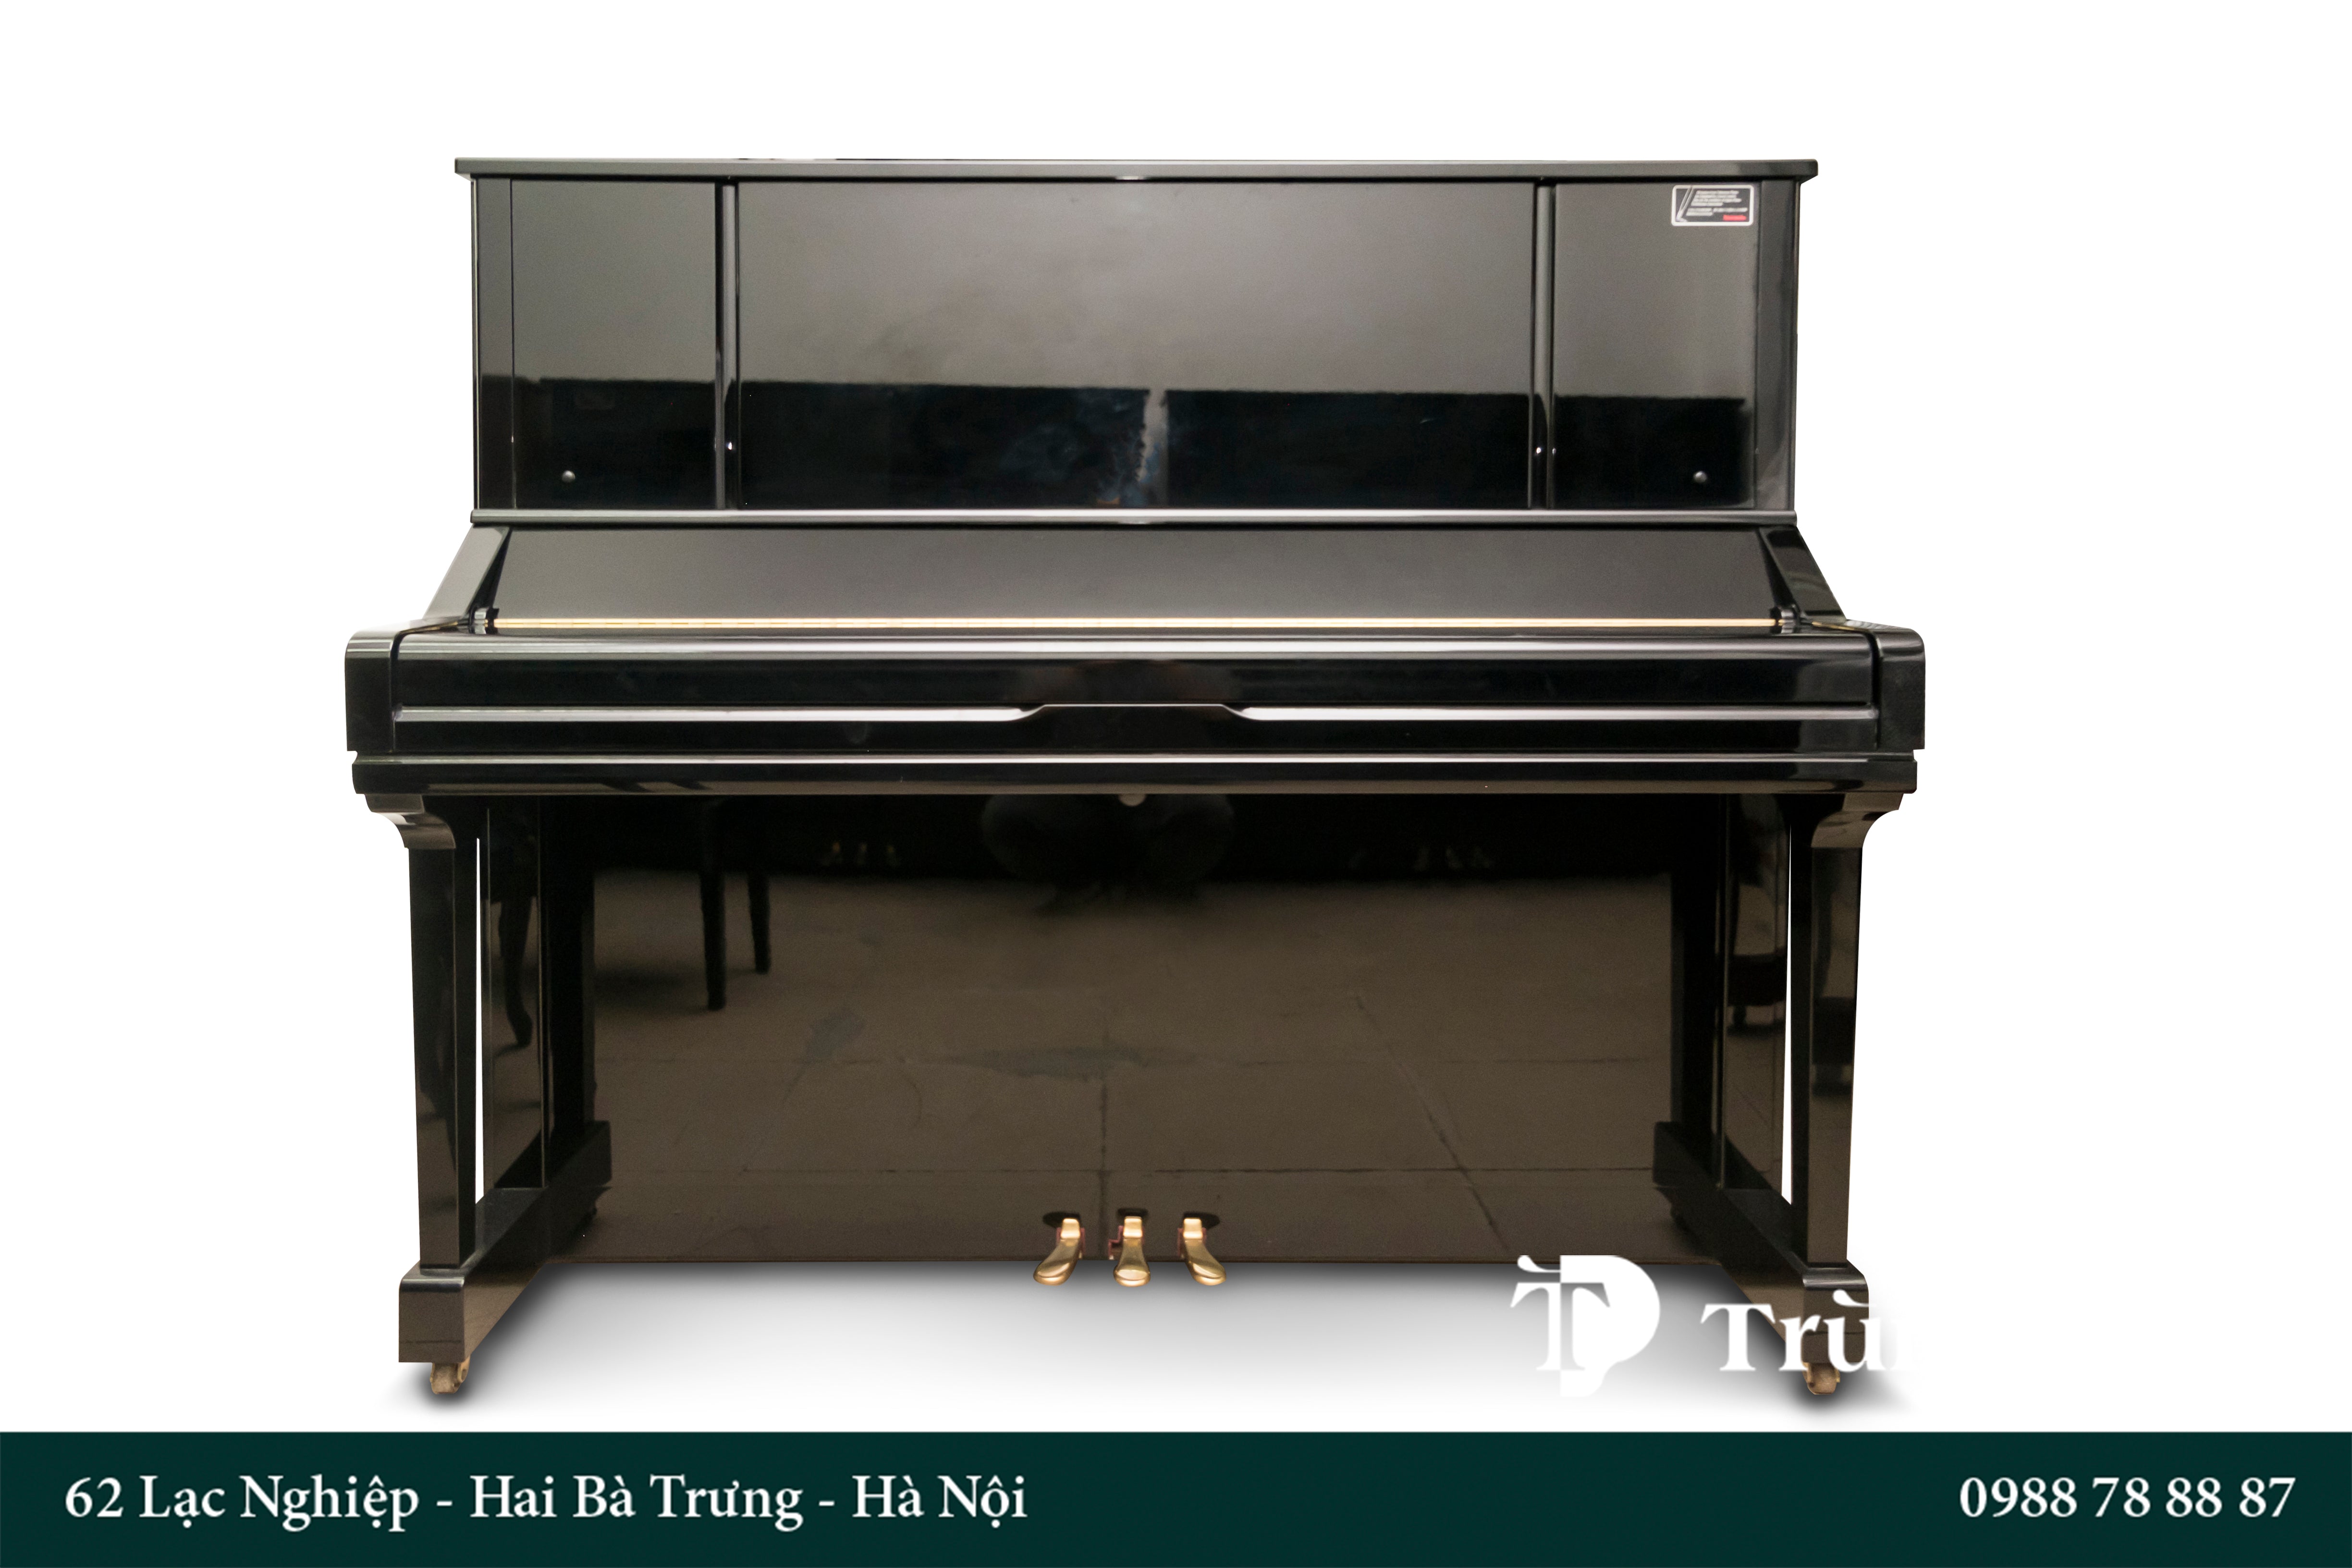 Đàn Piano Yamaha YU30